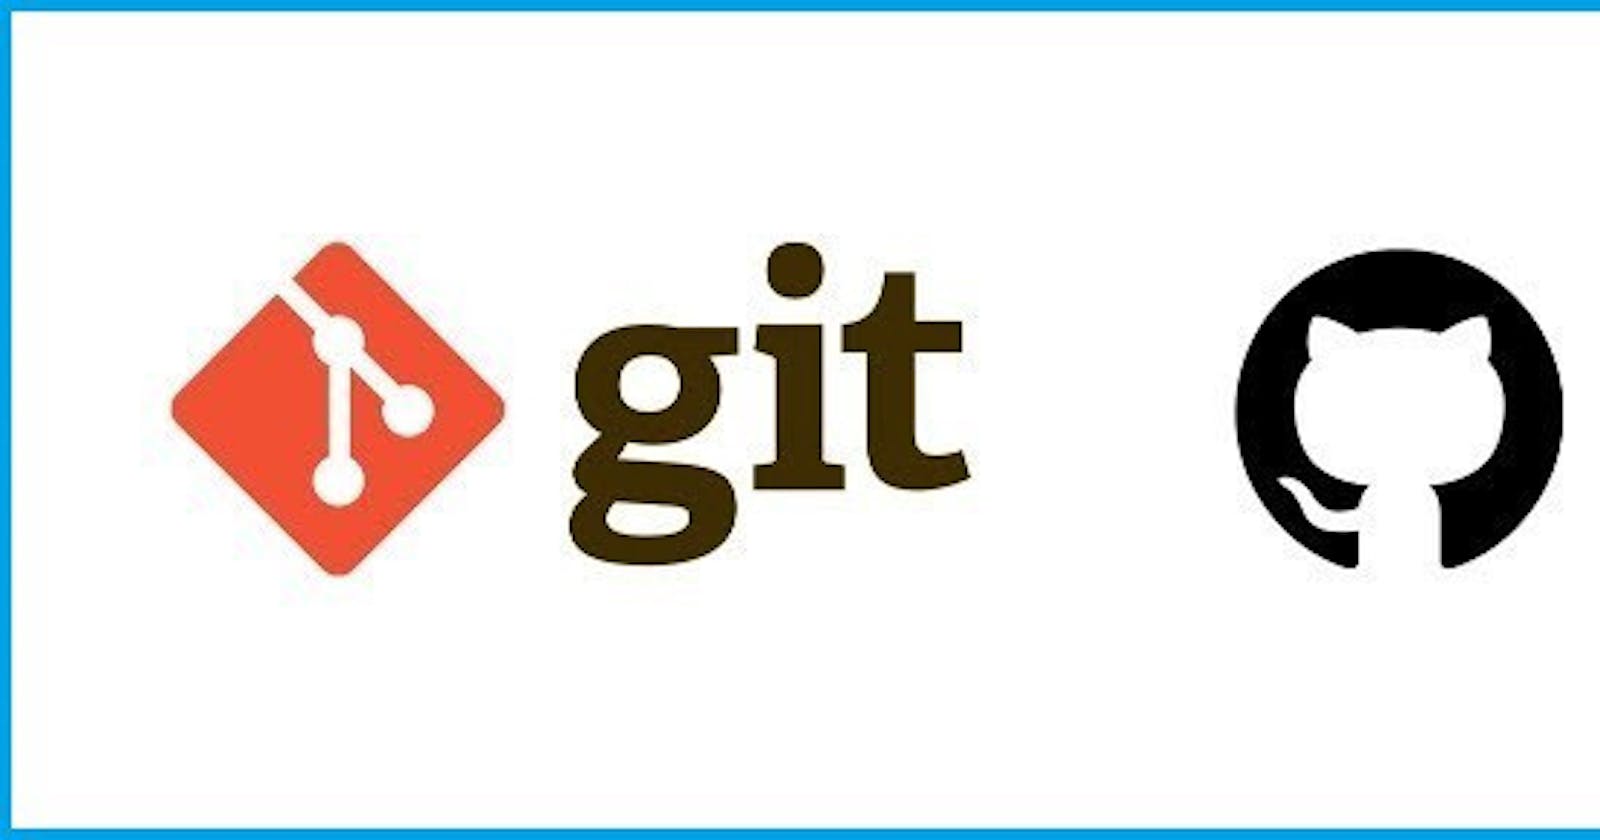 Introduction To Git And Git-hub